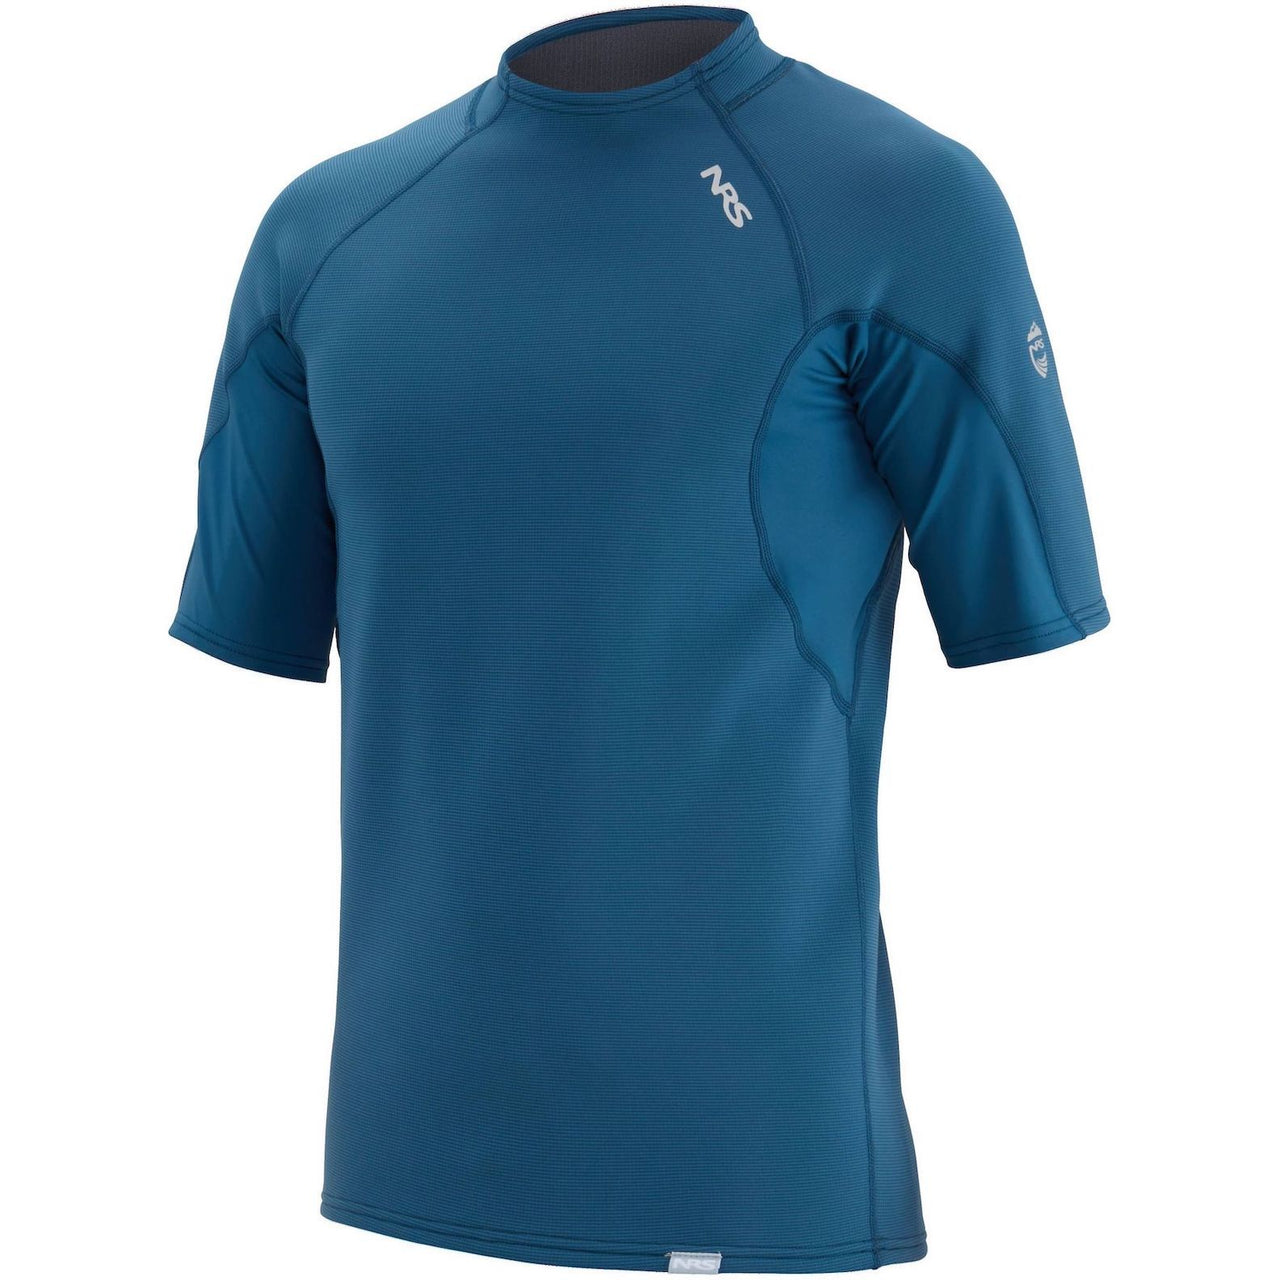 Men's HydroSkin 0.5 Short-Sleeve Shirt